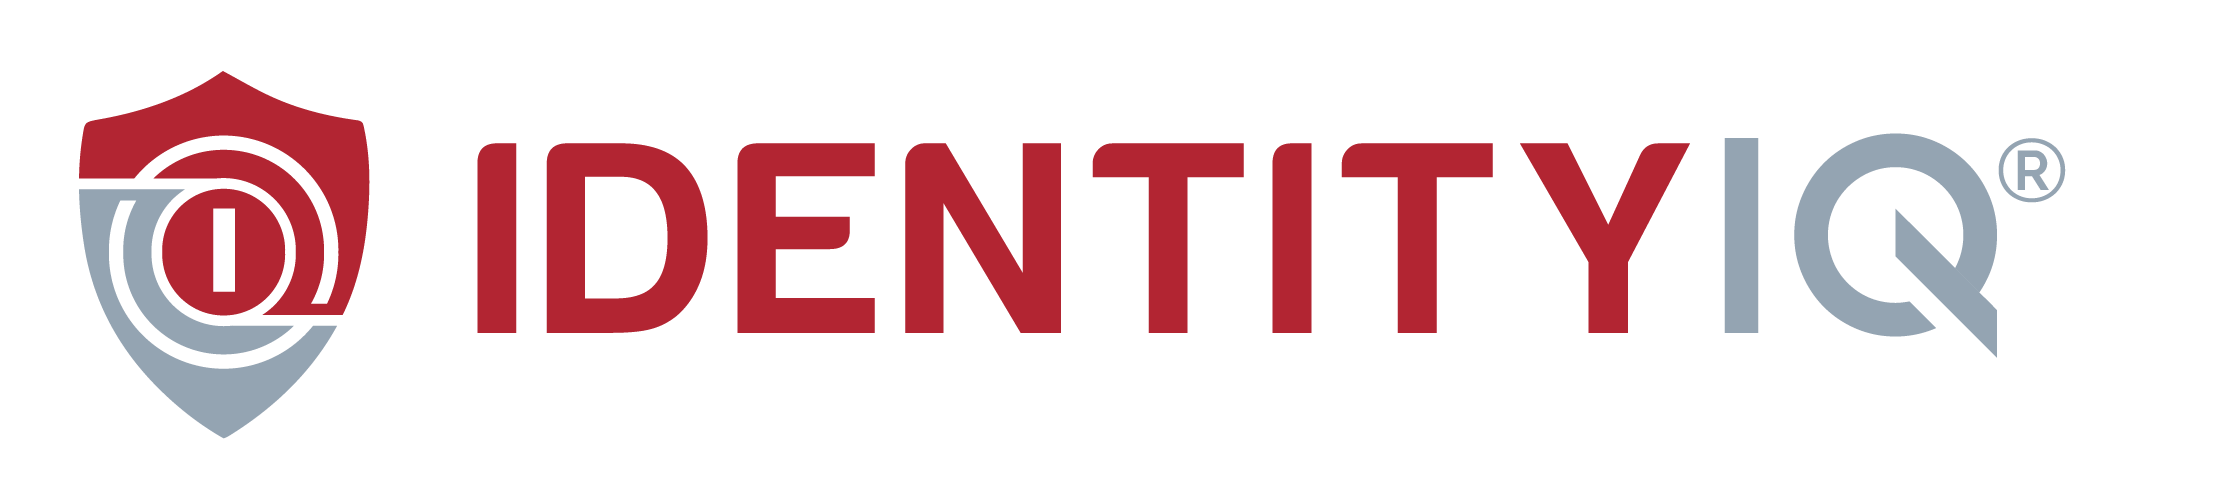 Identity IQ logo